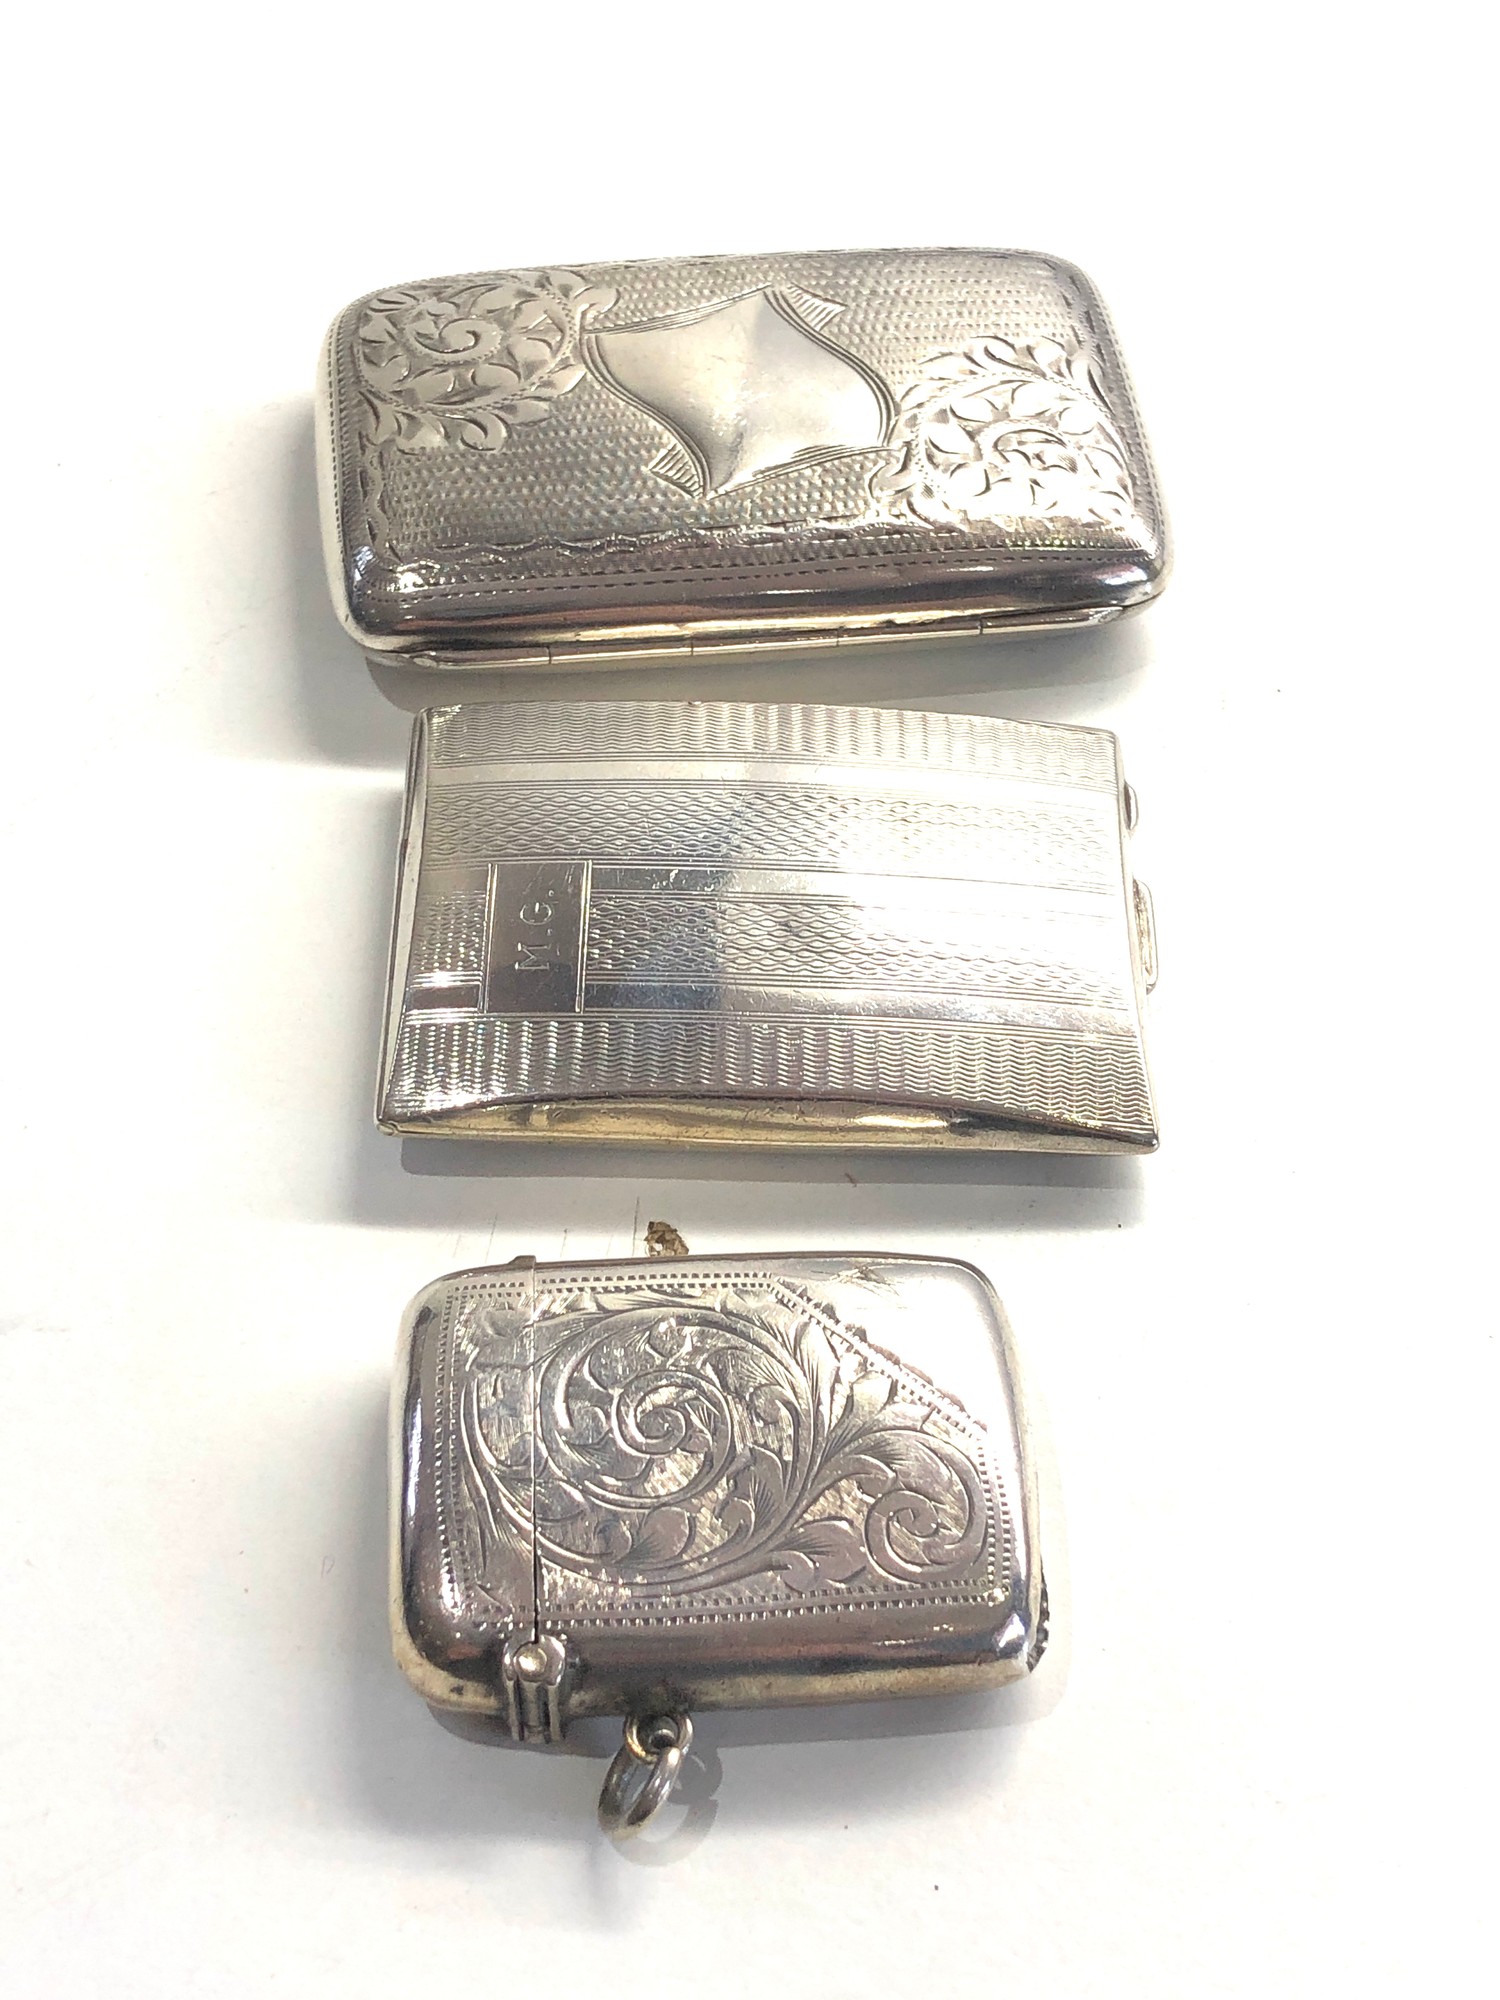 Antique silver vesta case cigarette case and match book holder weight 122g - Image 2 of 4